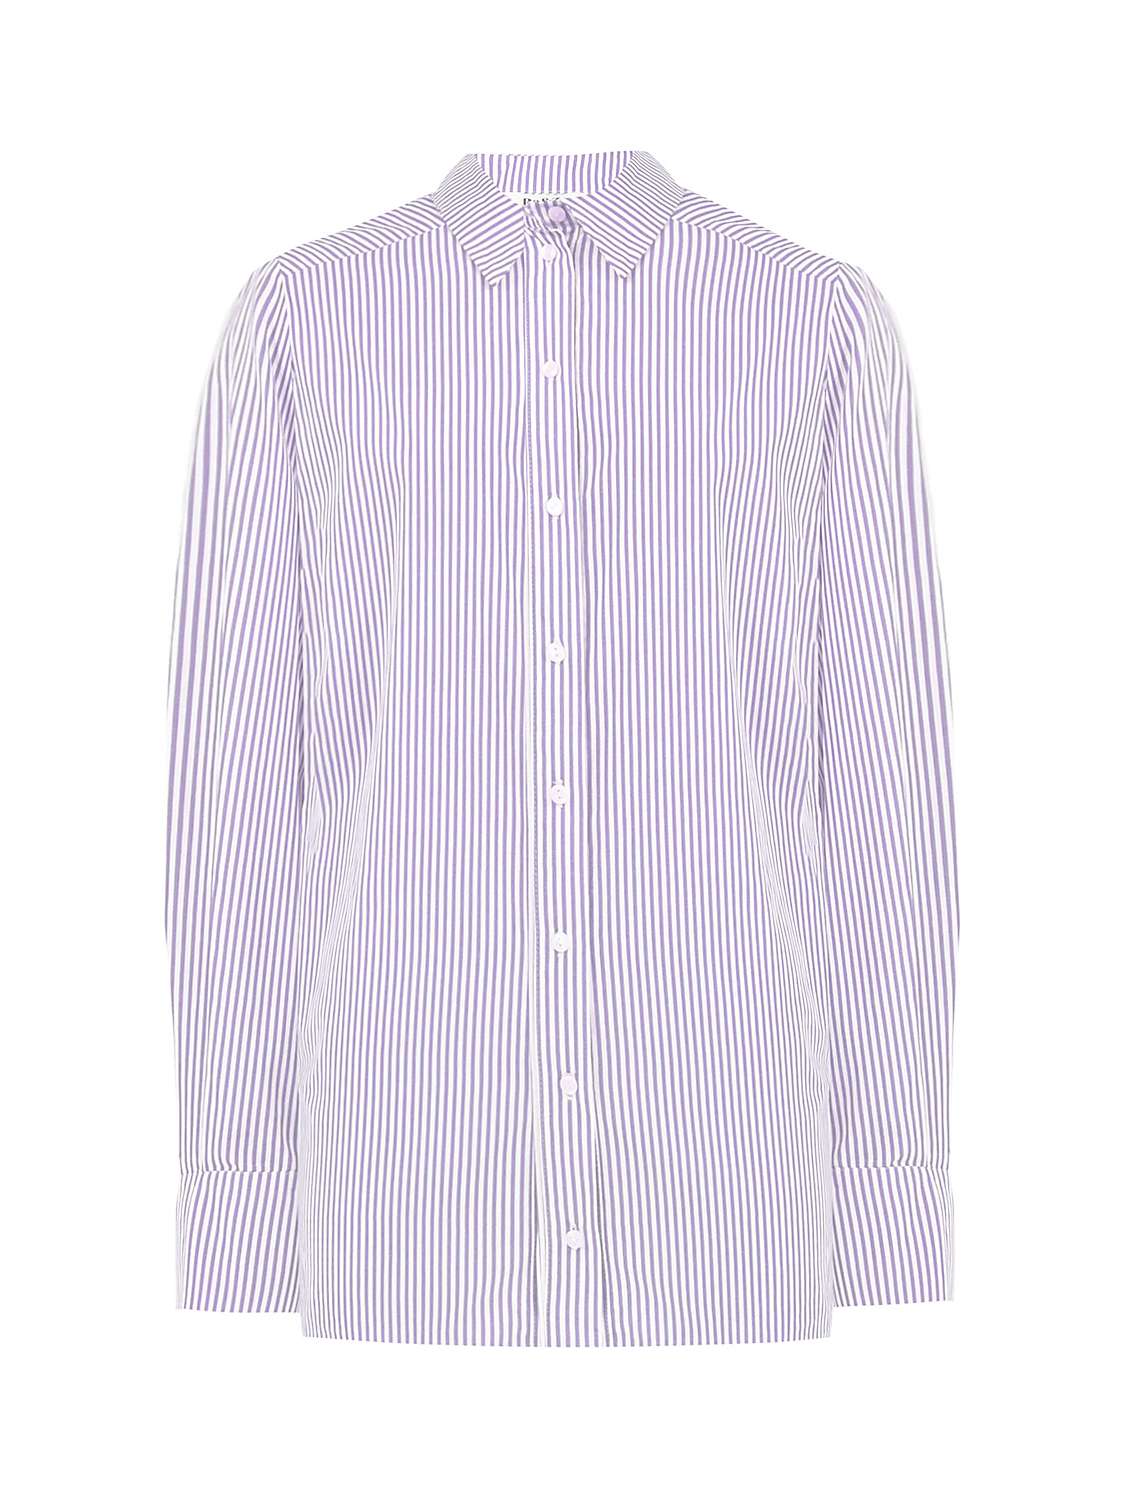 Buy Ro&Zo Petite Pinstripe Cotton Poplin Shirt Online at johnlewis.com